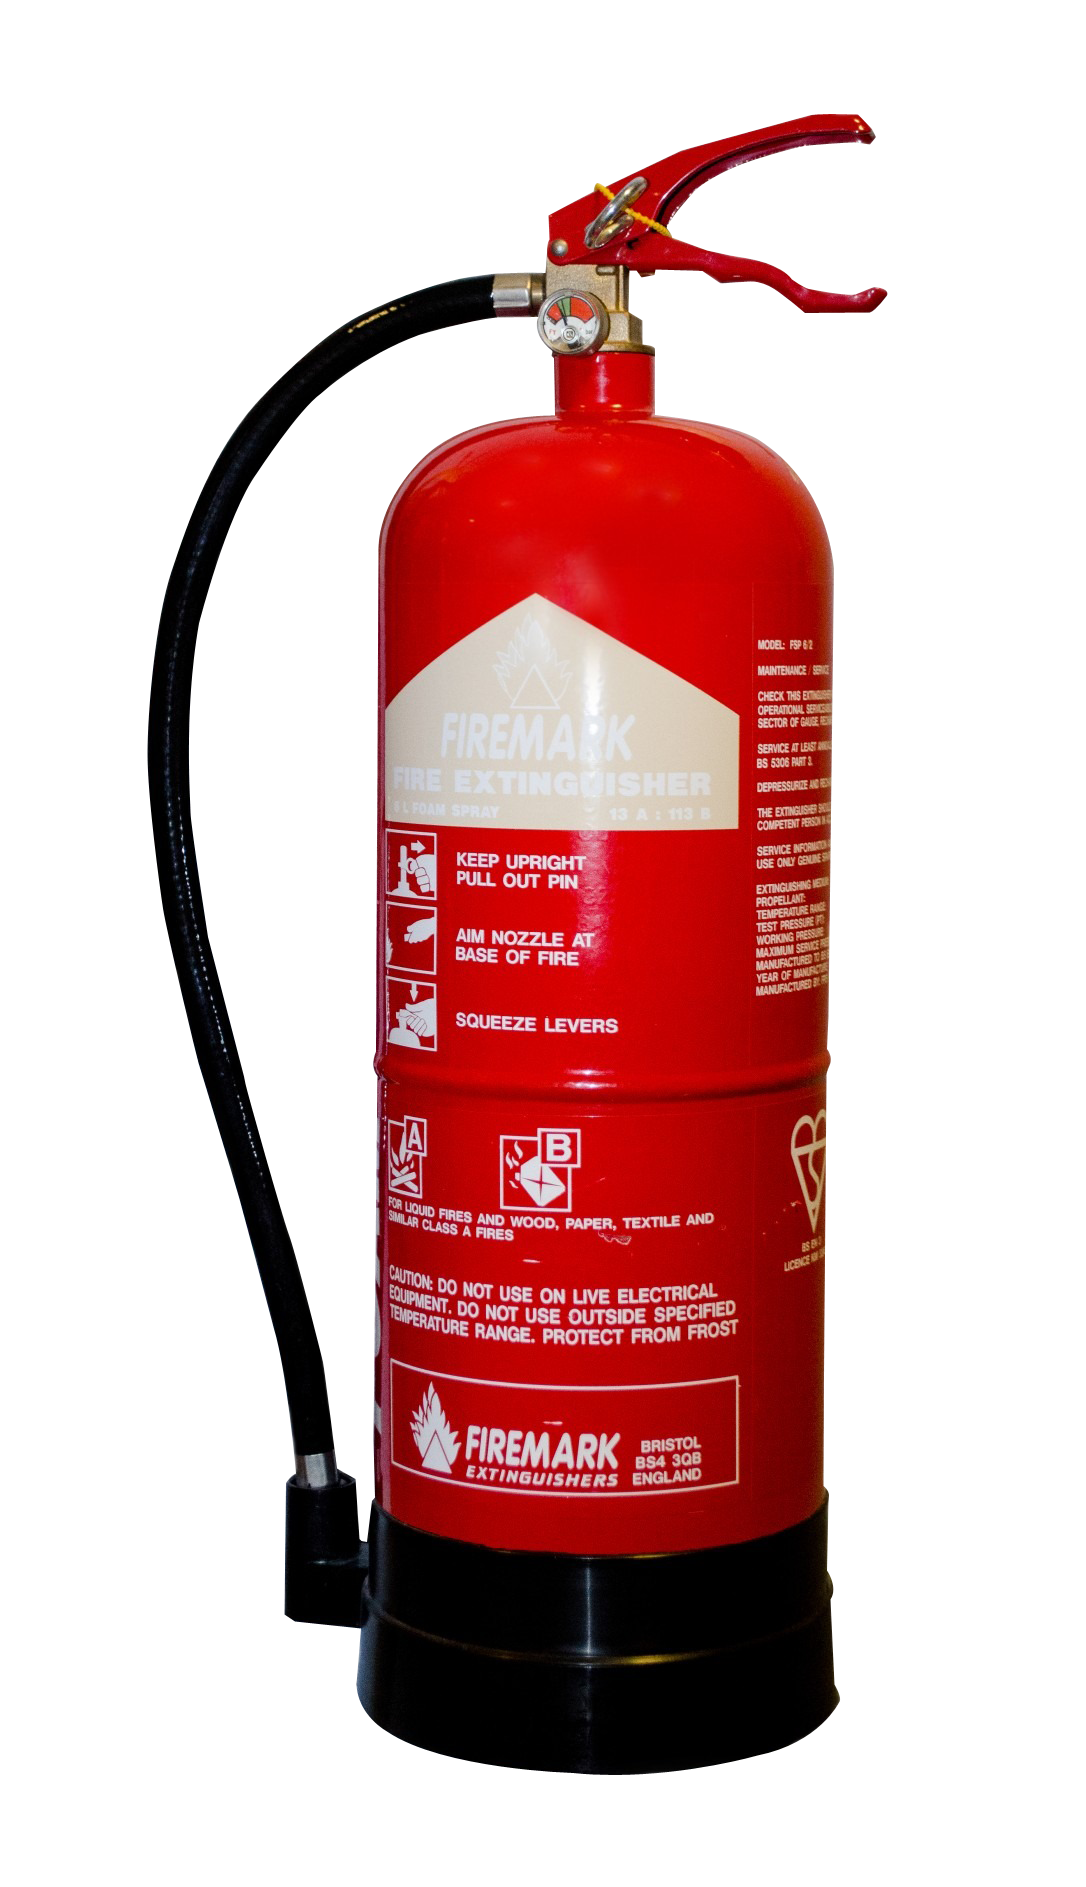 Download PNG image - Fire Extinguisher PNG Transparent Image 